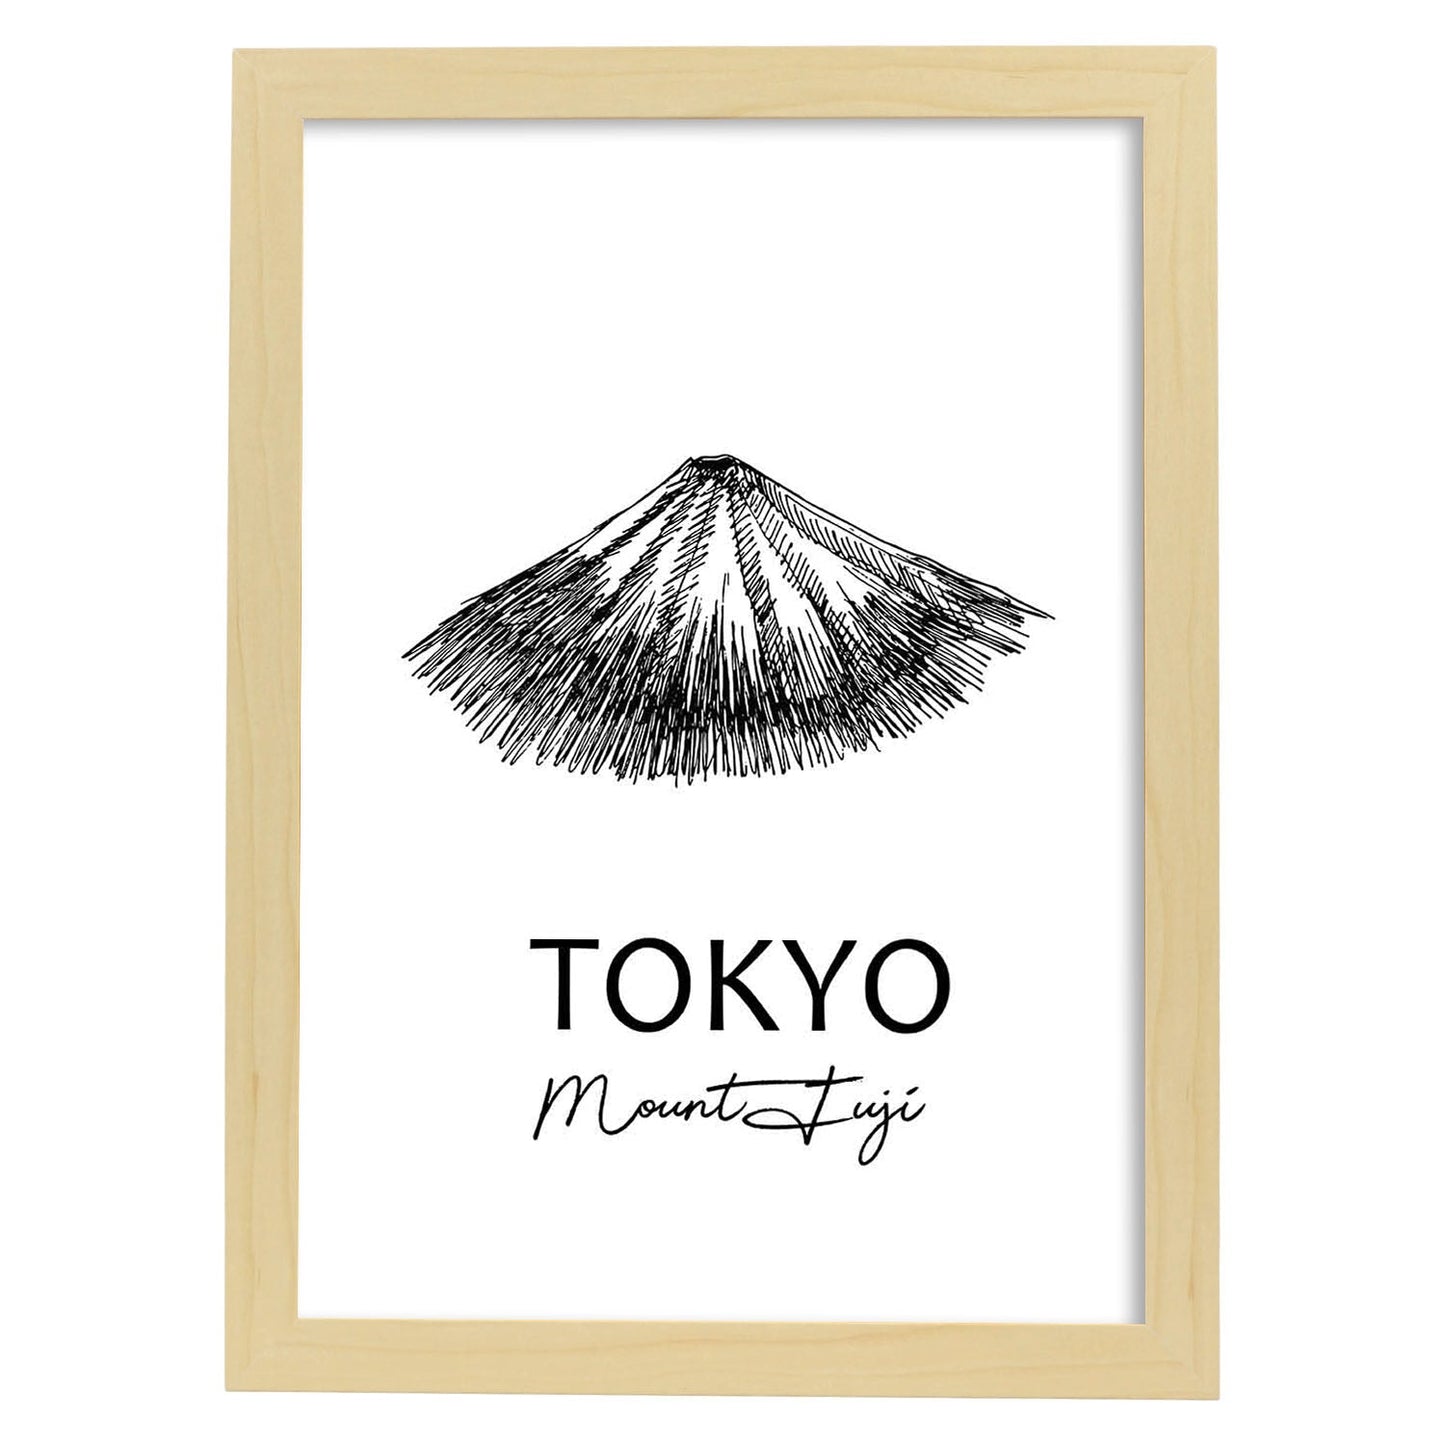 Poster de Tokyo - Monte Fuji. Láminas con monumentos de ciudades.-Artwork-Nacnic-A3-Marco Madera clara-Nacnic Estudio SL